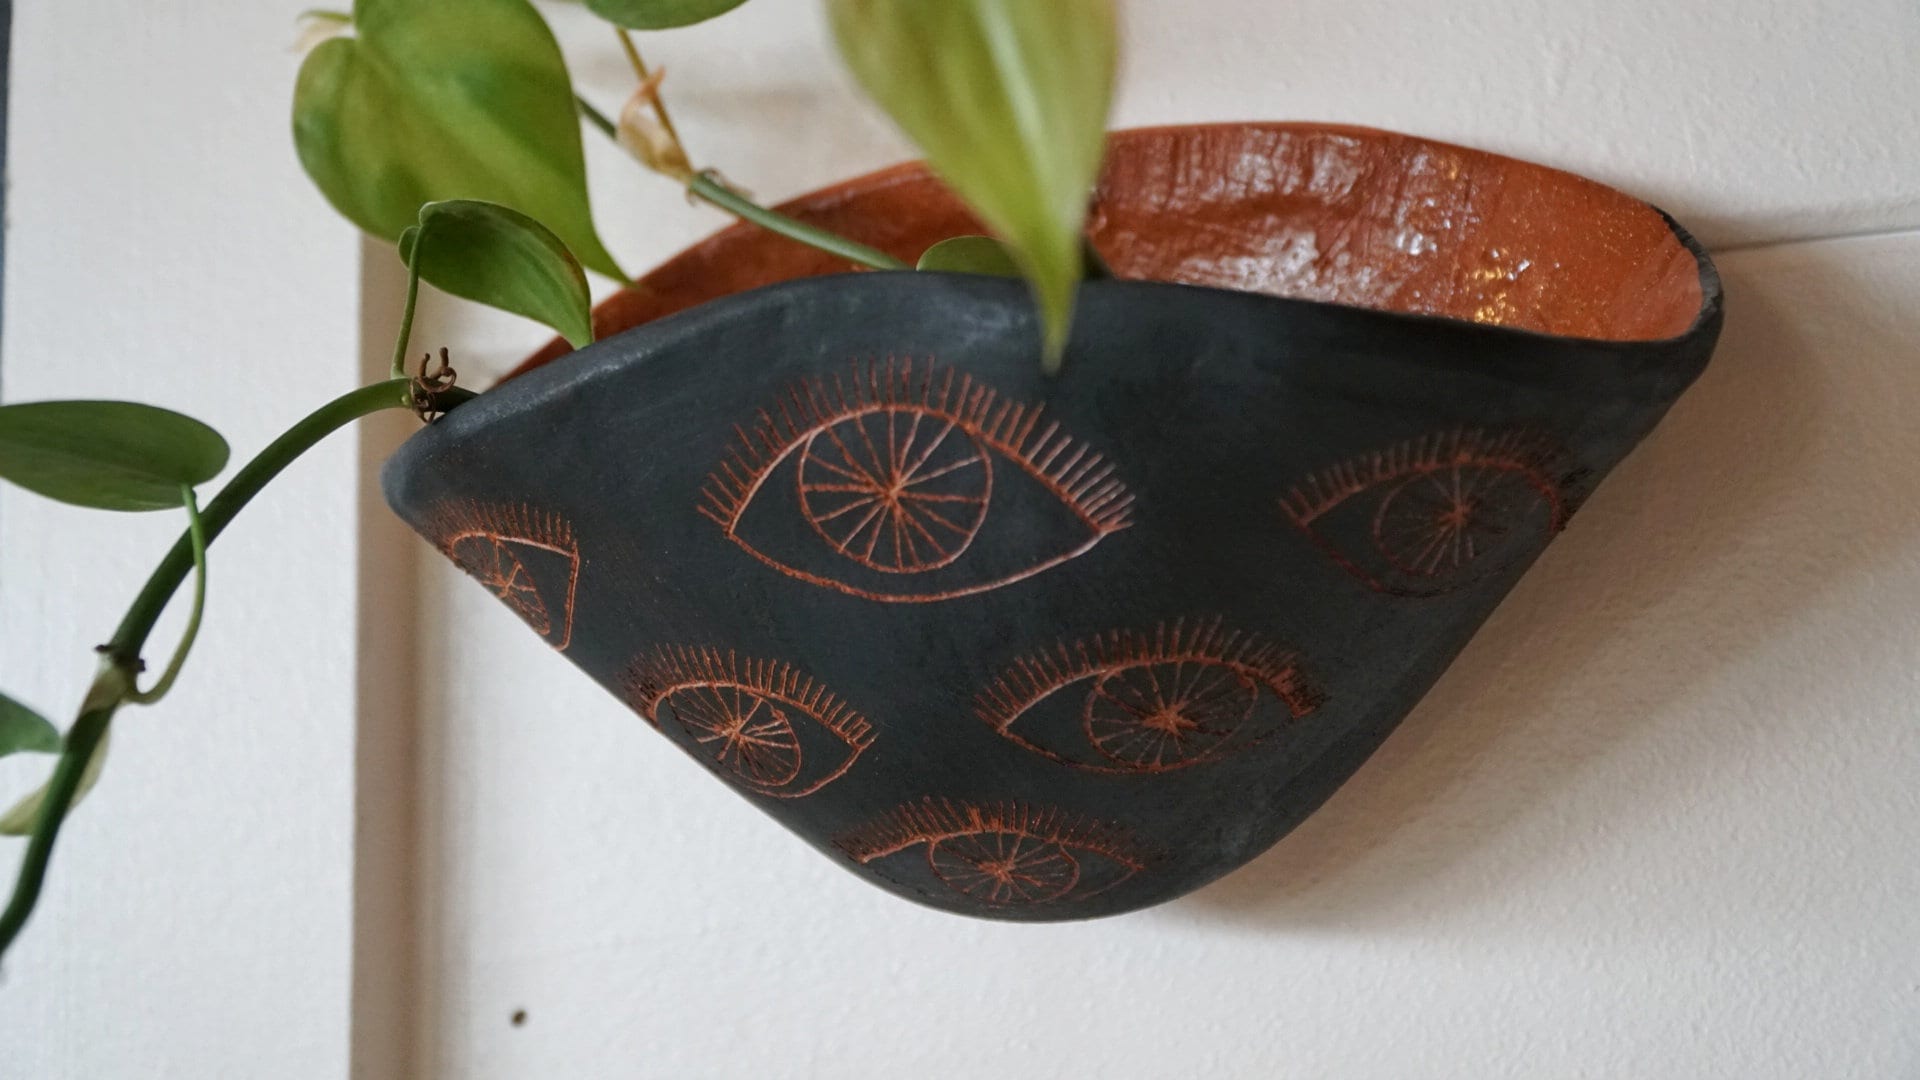 Black & Terracotta Wall Pocket Planter w/ "Eye" Design - Ceramic Wall Planter - Pottery - Succulent Pot - Houseplant - Planter